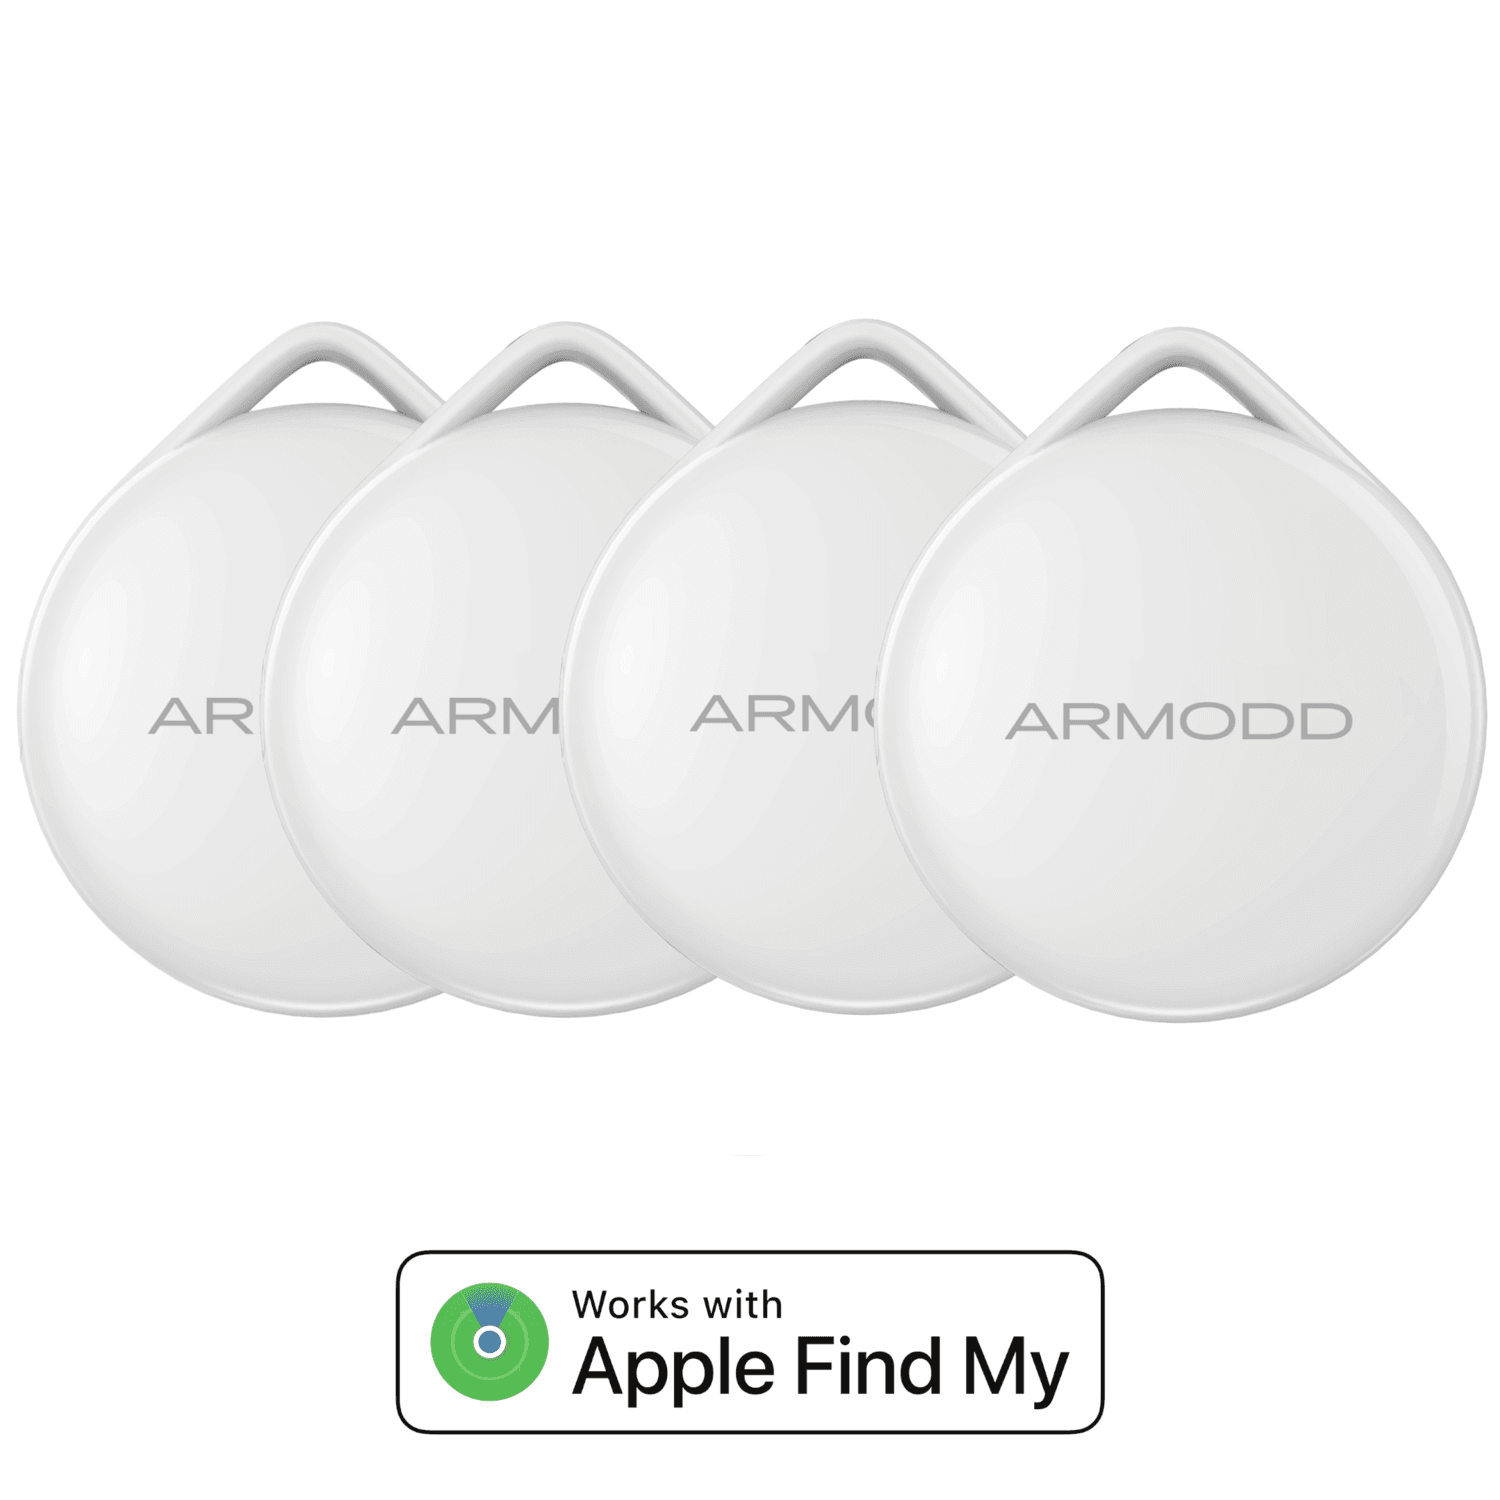 Set 4 ks ARMODD iTag bílý (AirTag alternativa) s podporou Apple Find My (Najít)